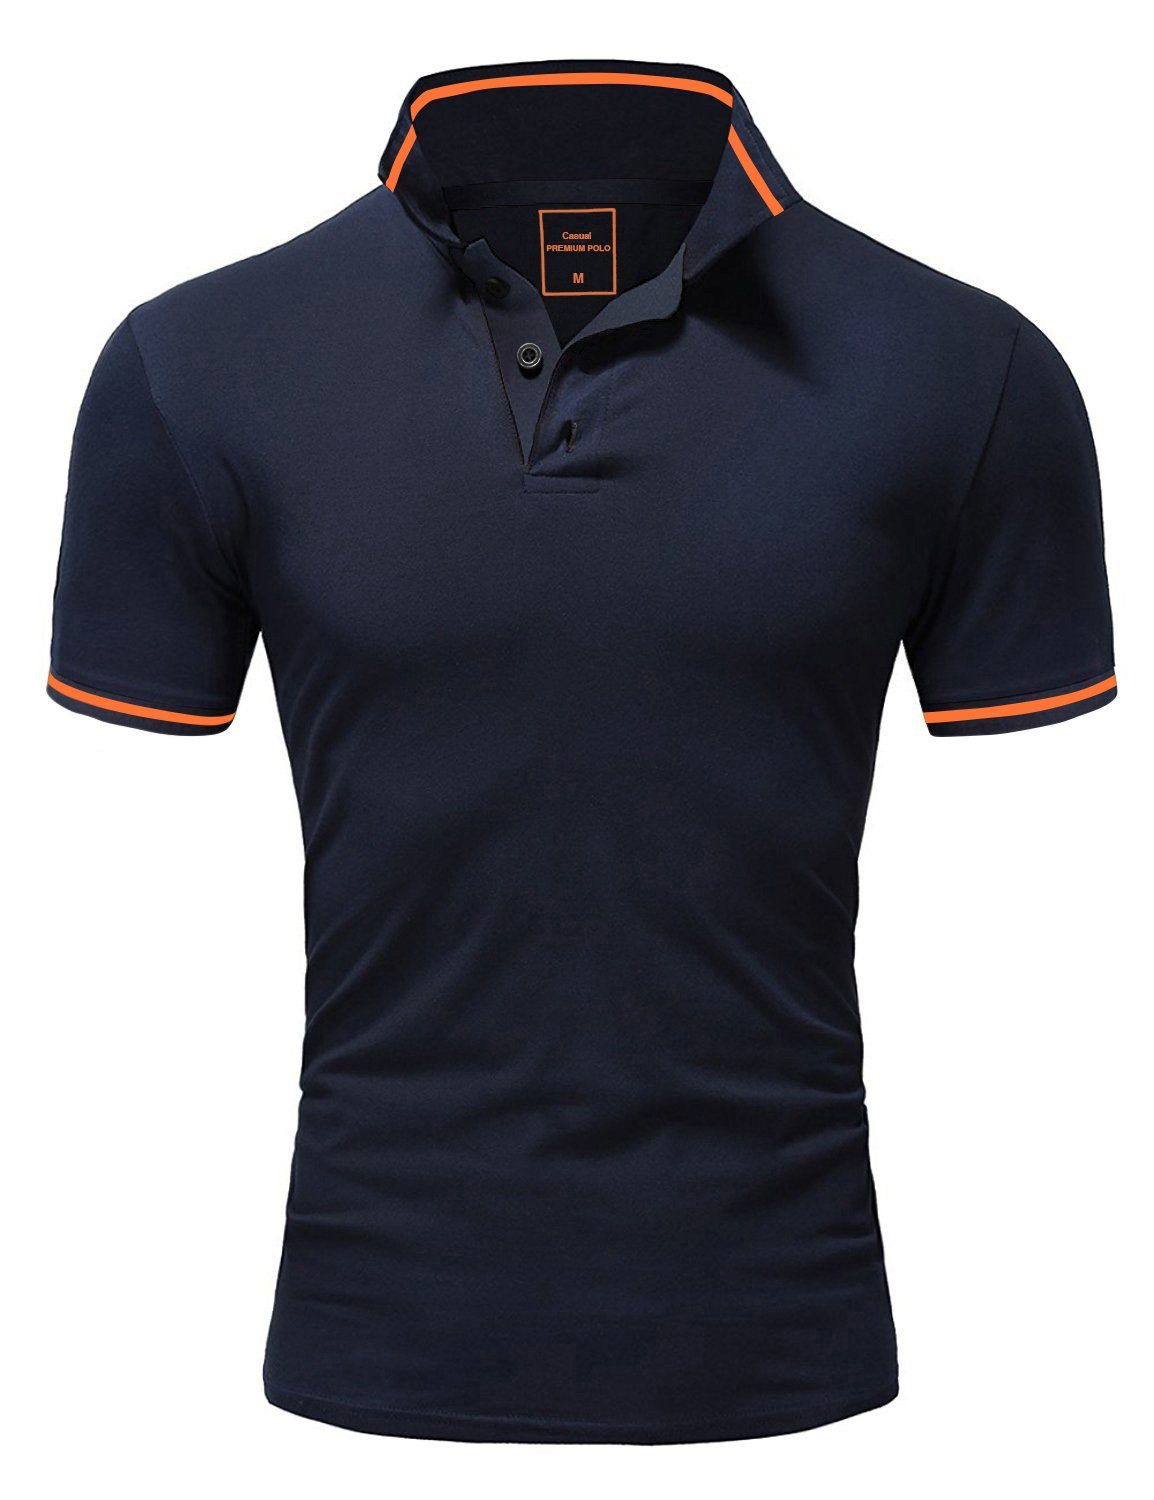 Amaci&Sons Poloshirt PROVIDENCE Herren Basic Kontrast Kurzarm Polohemd T-Shirt Navyblau/Orange